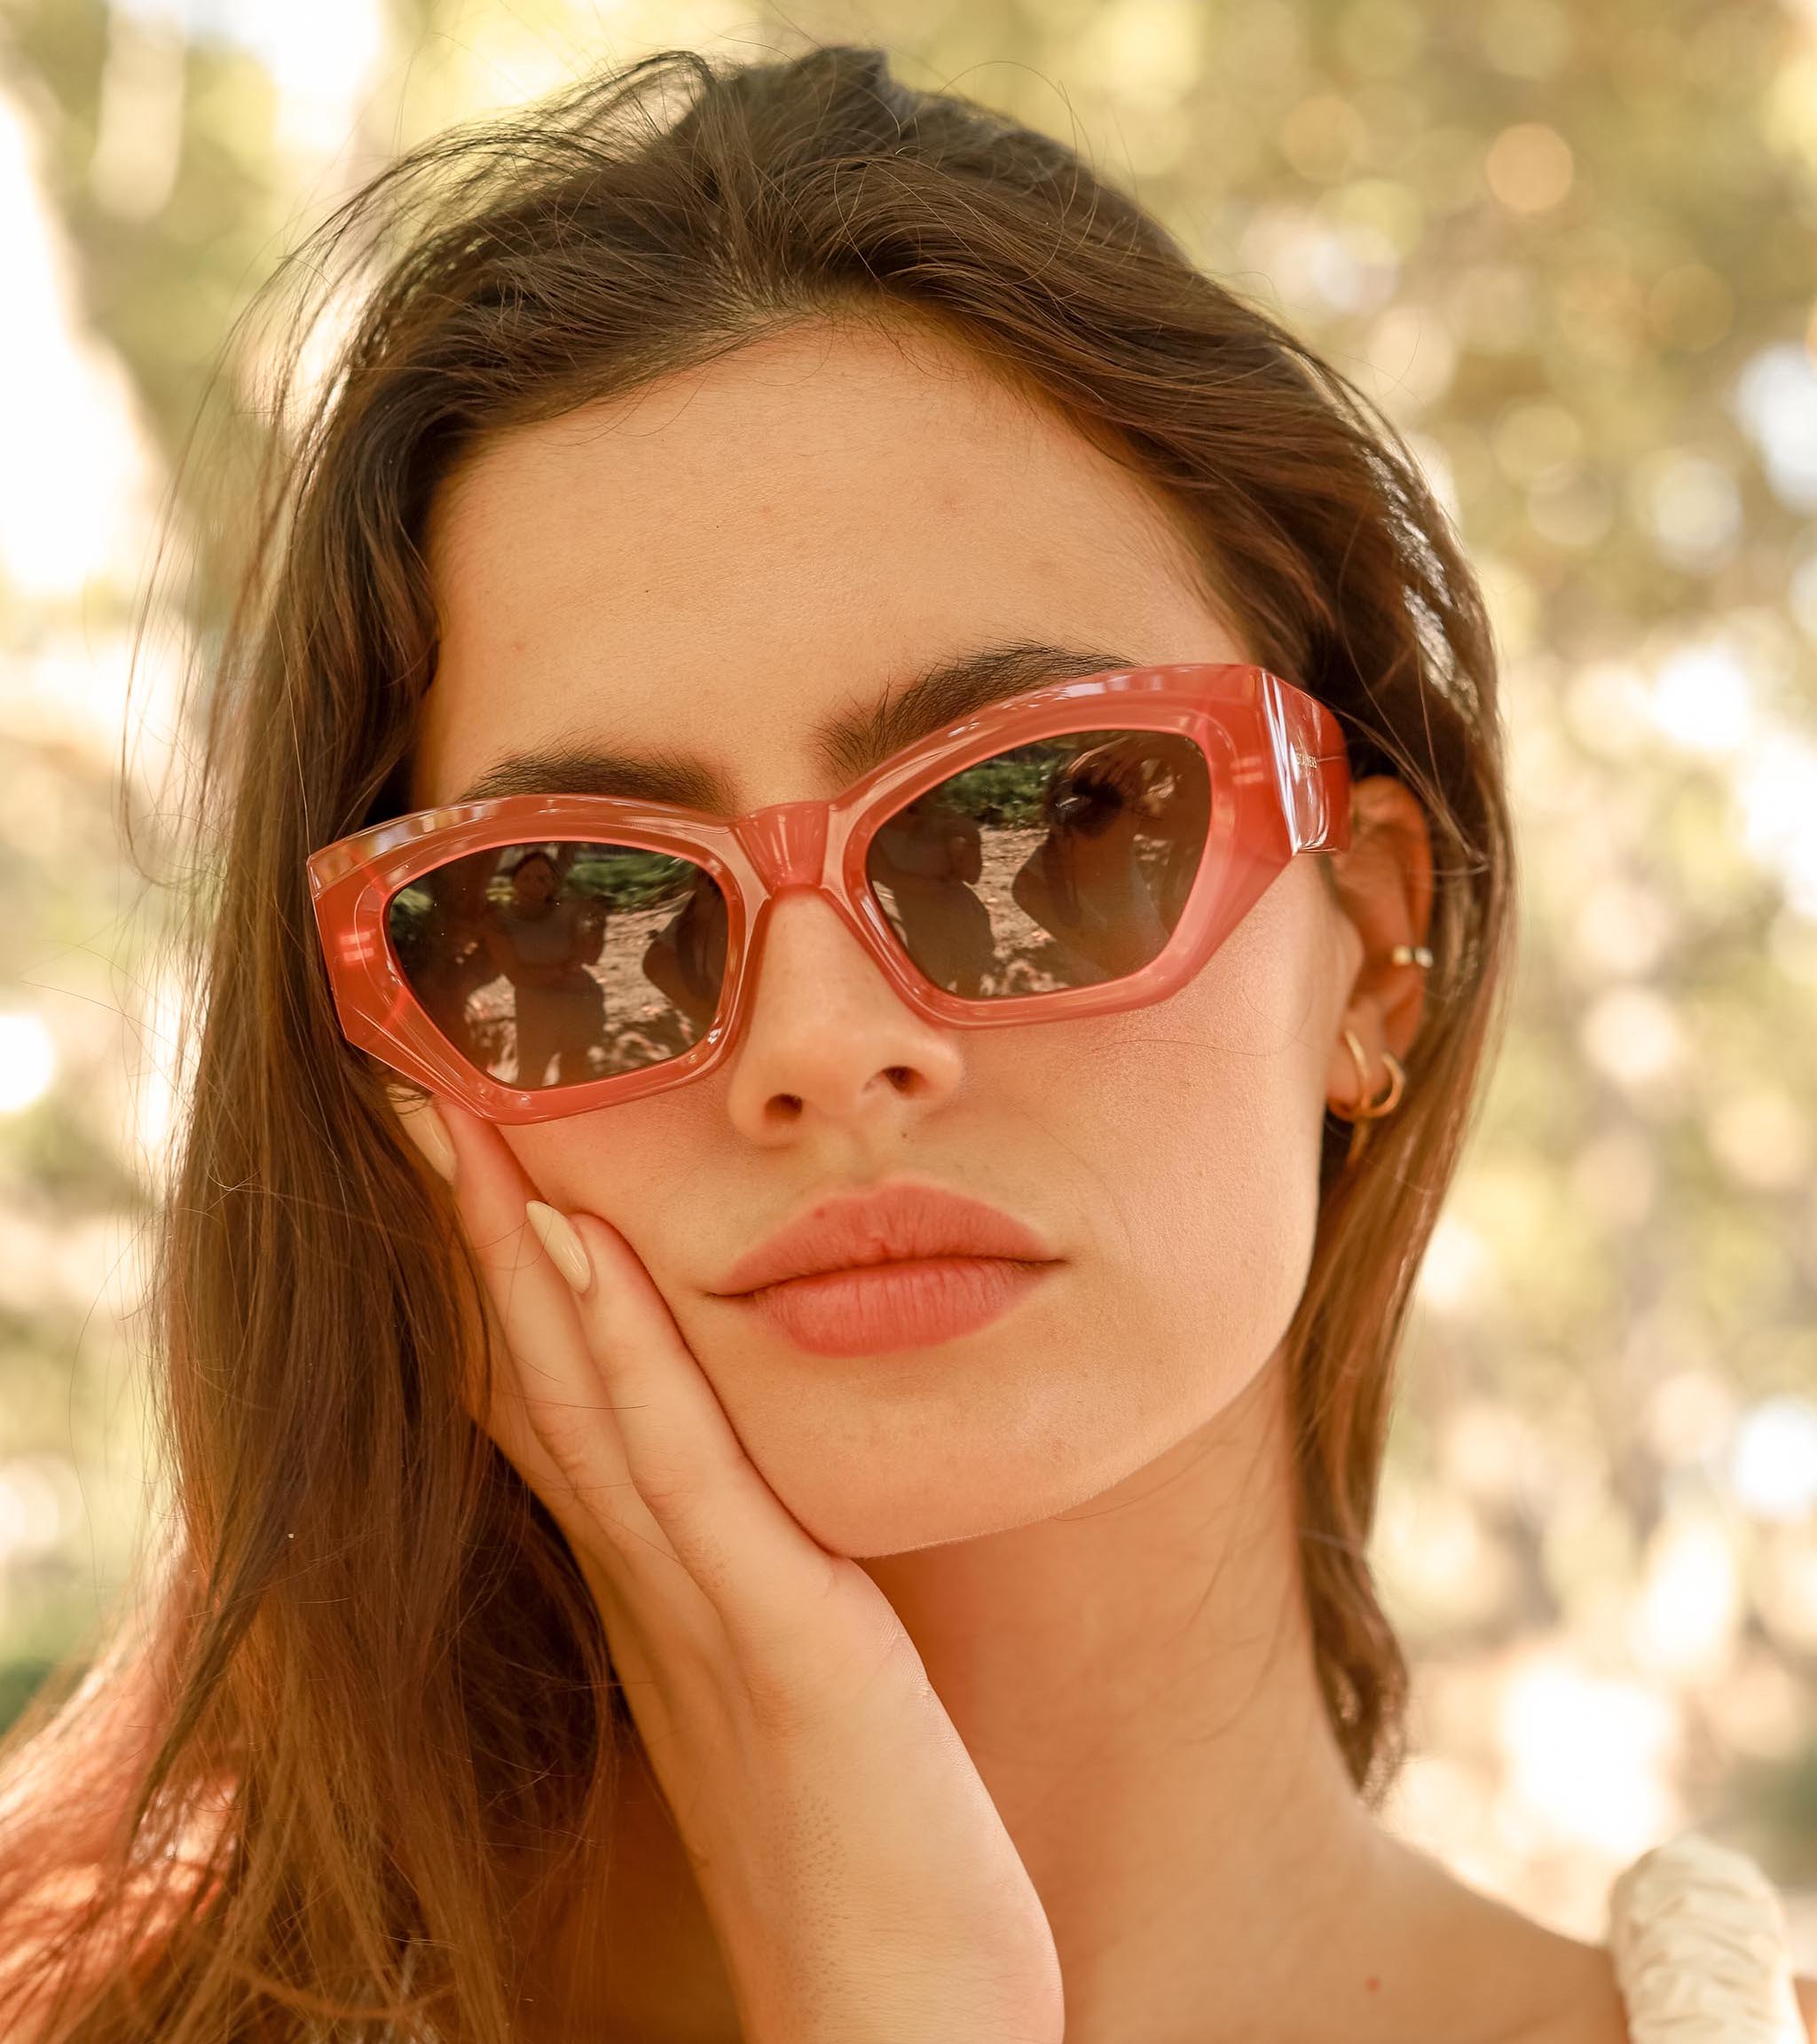 Biscayners Sunglasses |  Hampton Pink